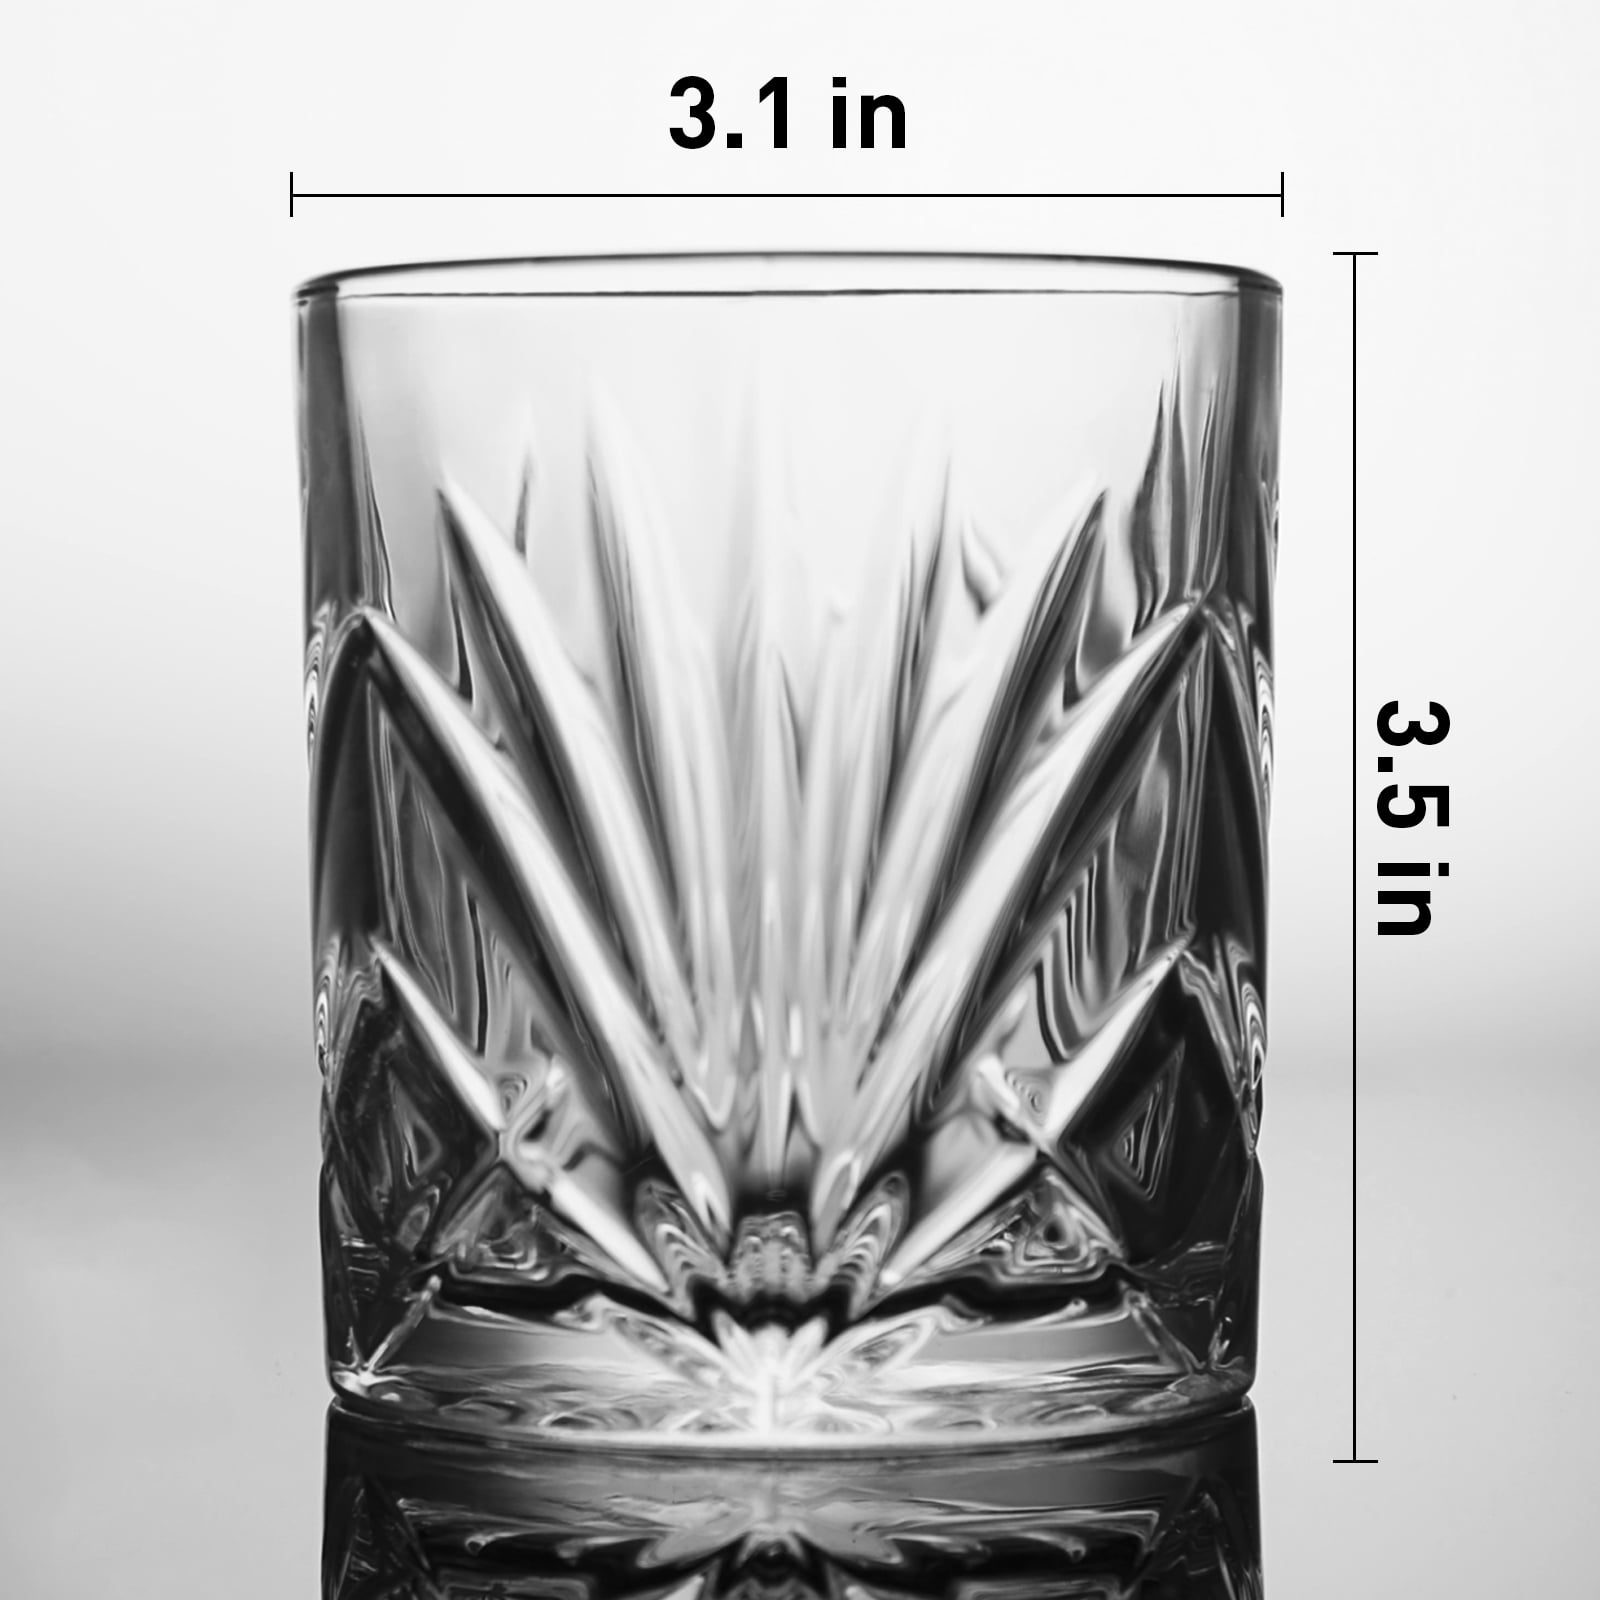 Gencywe Crystal Whiskey Glasses Set of 8(Buy 6, get 2 Free), 11 OZ Old  Fashioned